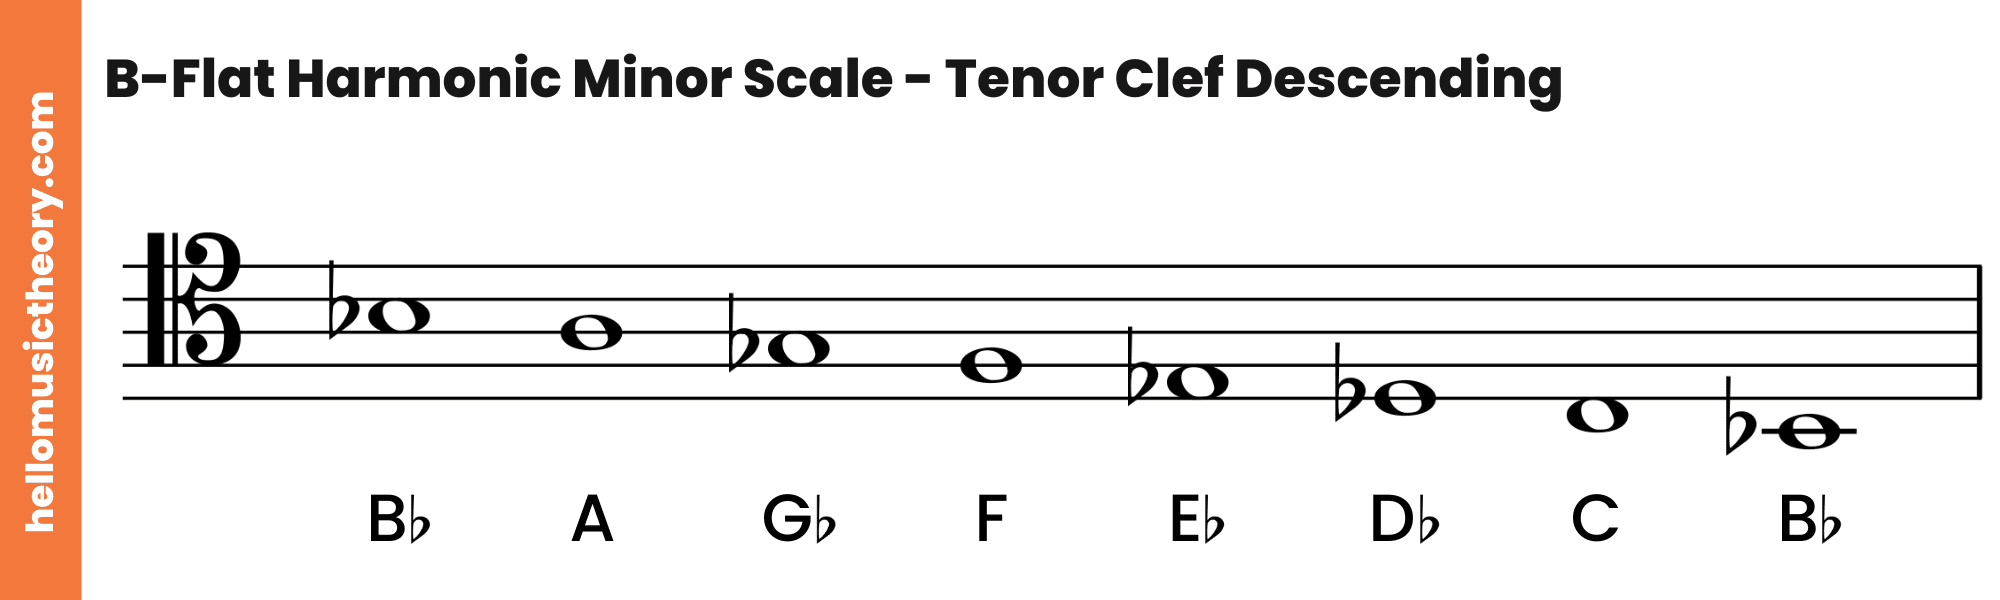 B-Flat Harmonic Minor Scale Tenor Clef Descending